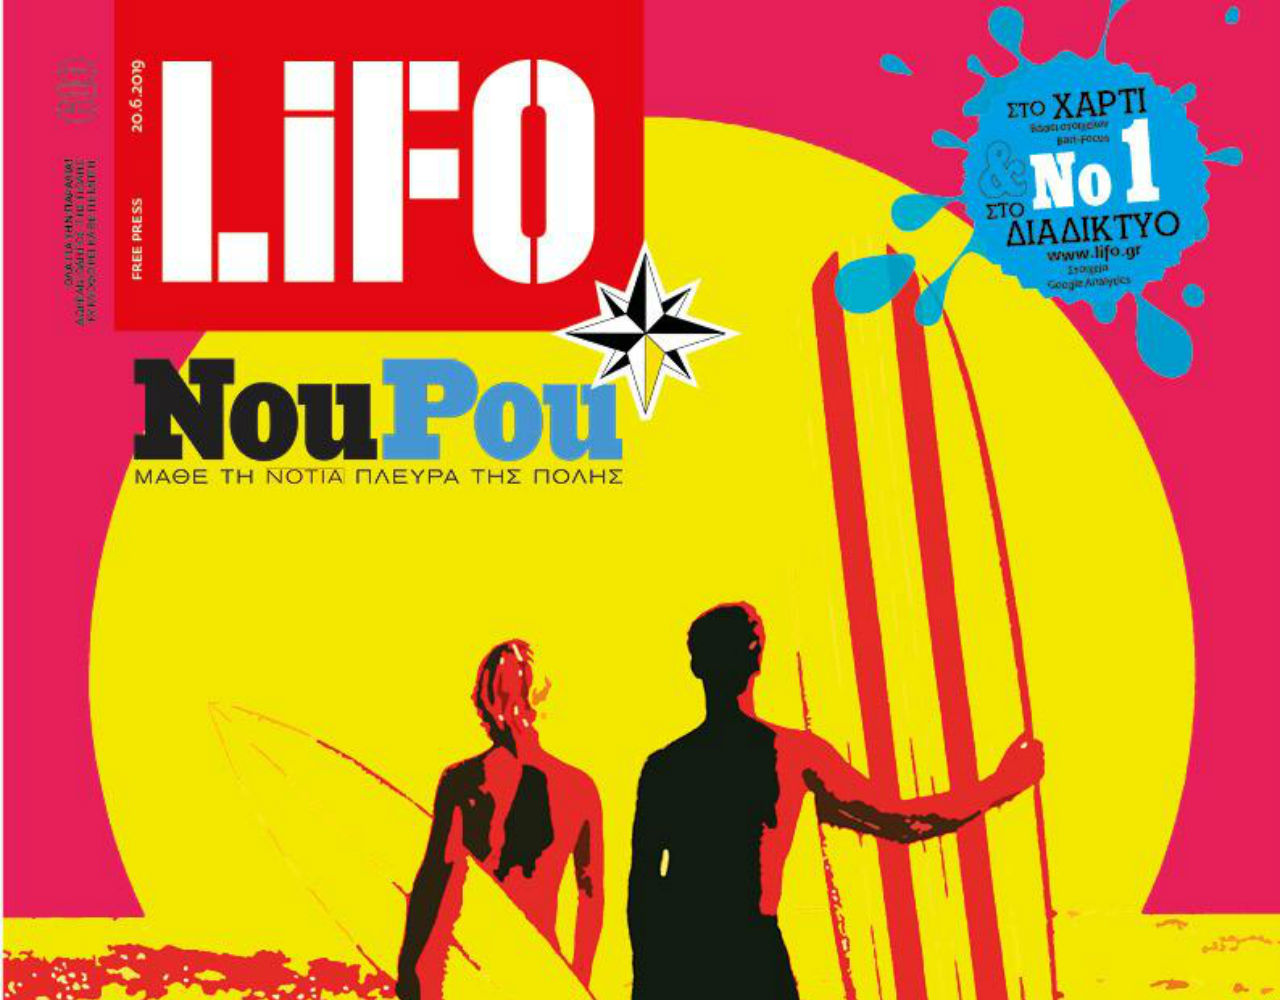 LiFO is a beach powered by NouPou